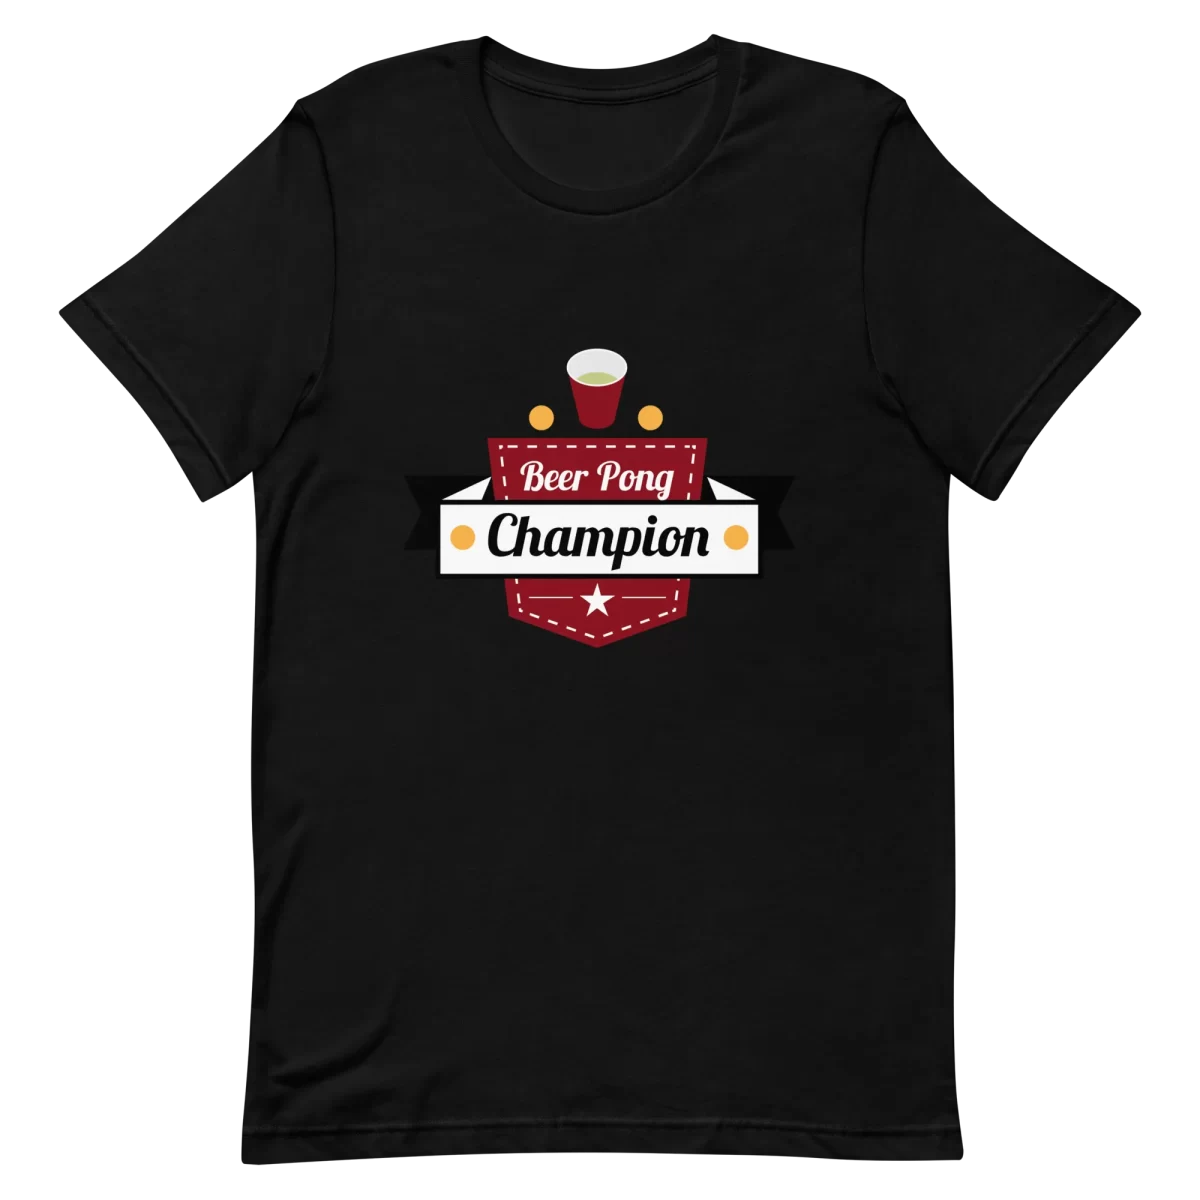 Unisex T-Shirt - Beer Pong Champion - Black